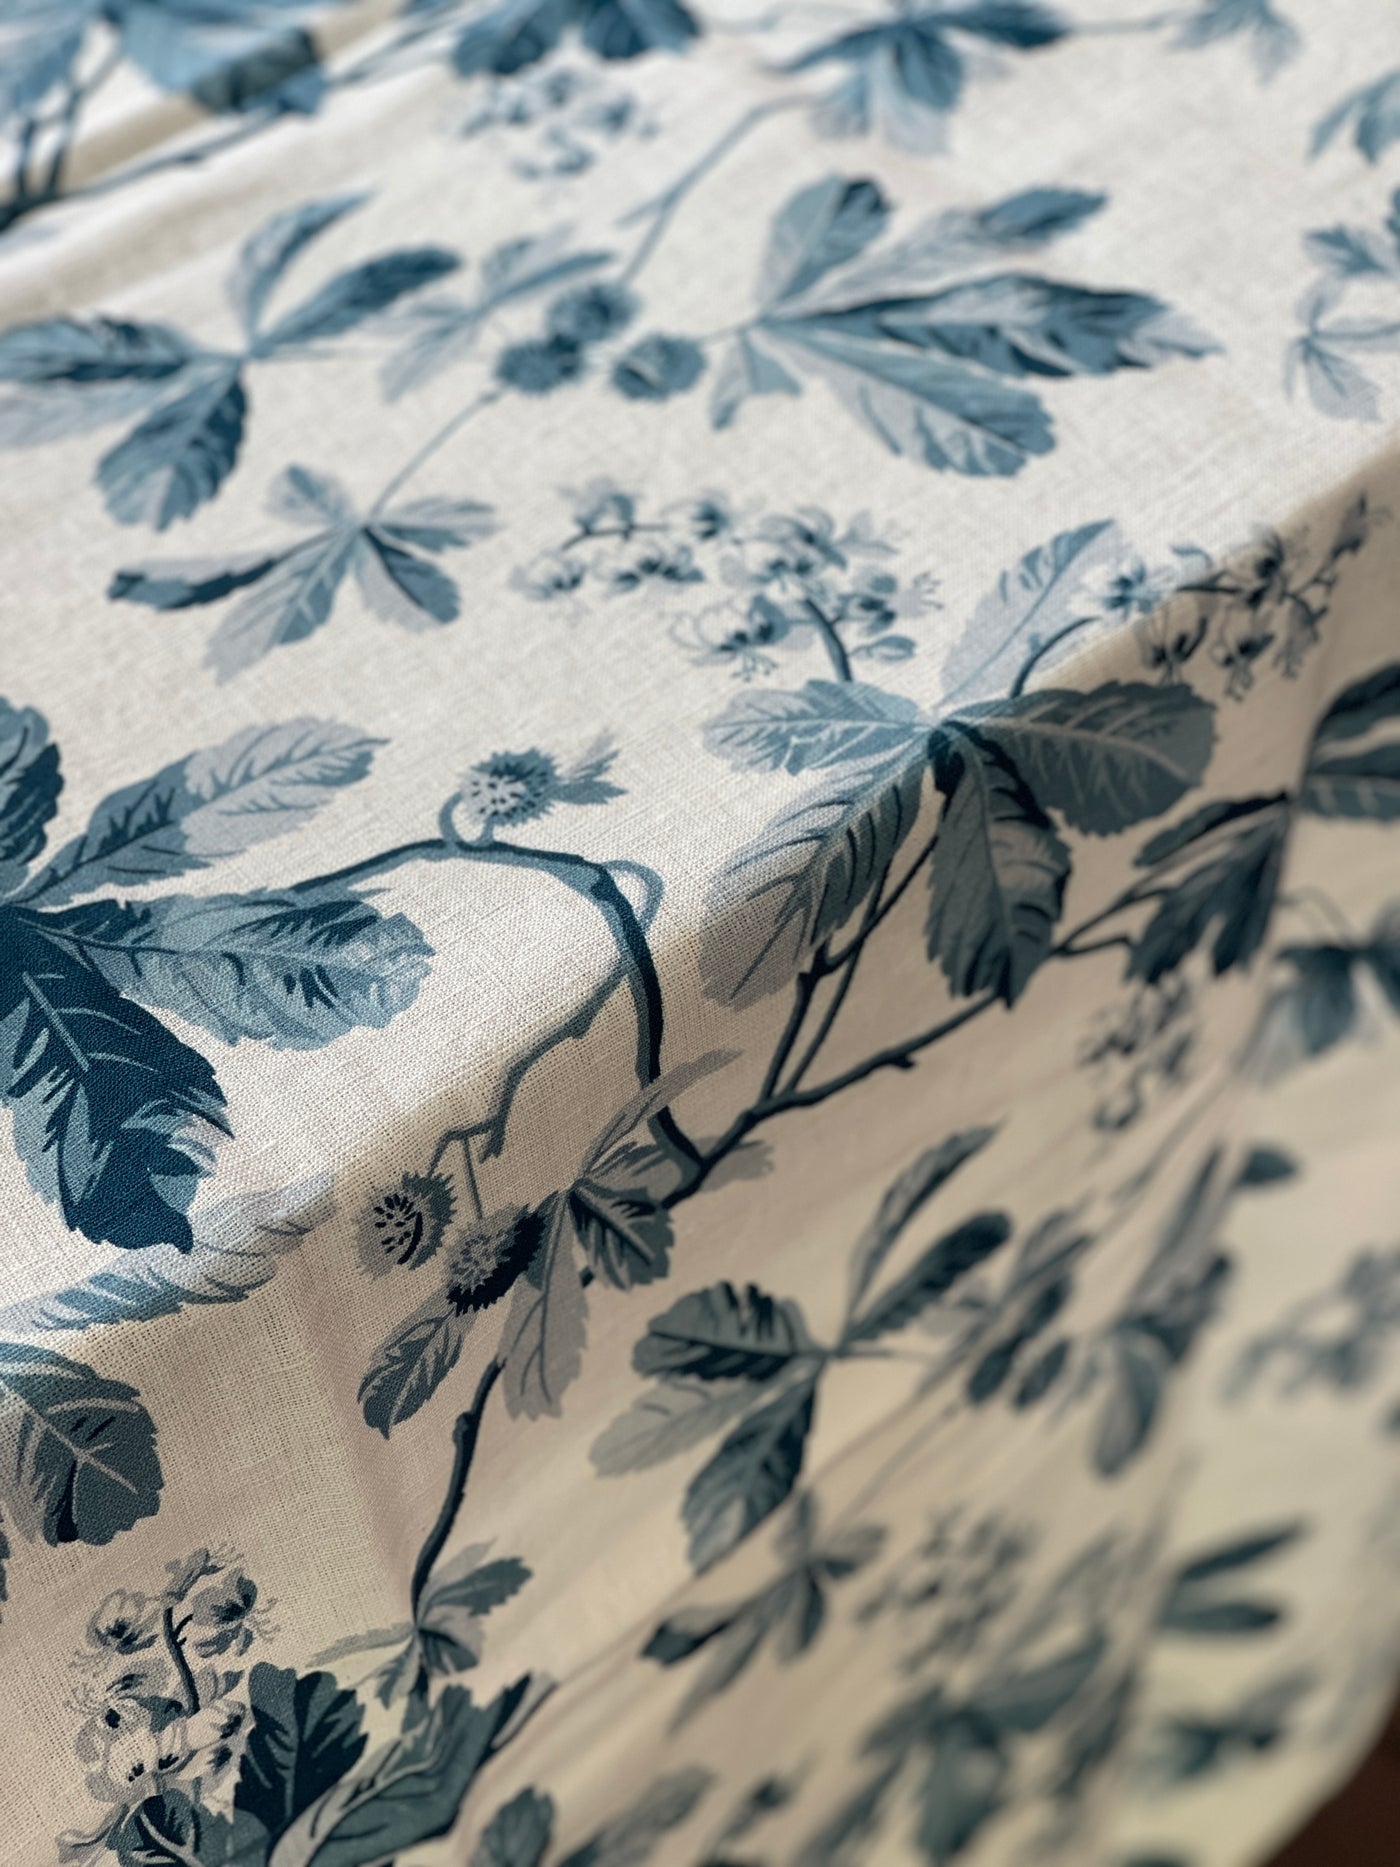 'Chestnut - Blue' - Tablecloth by D'Ascoli